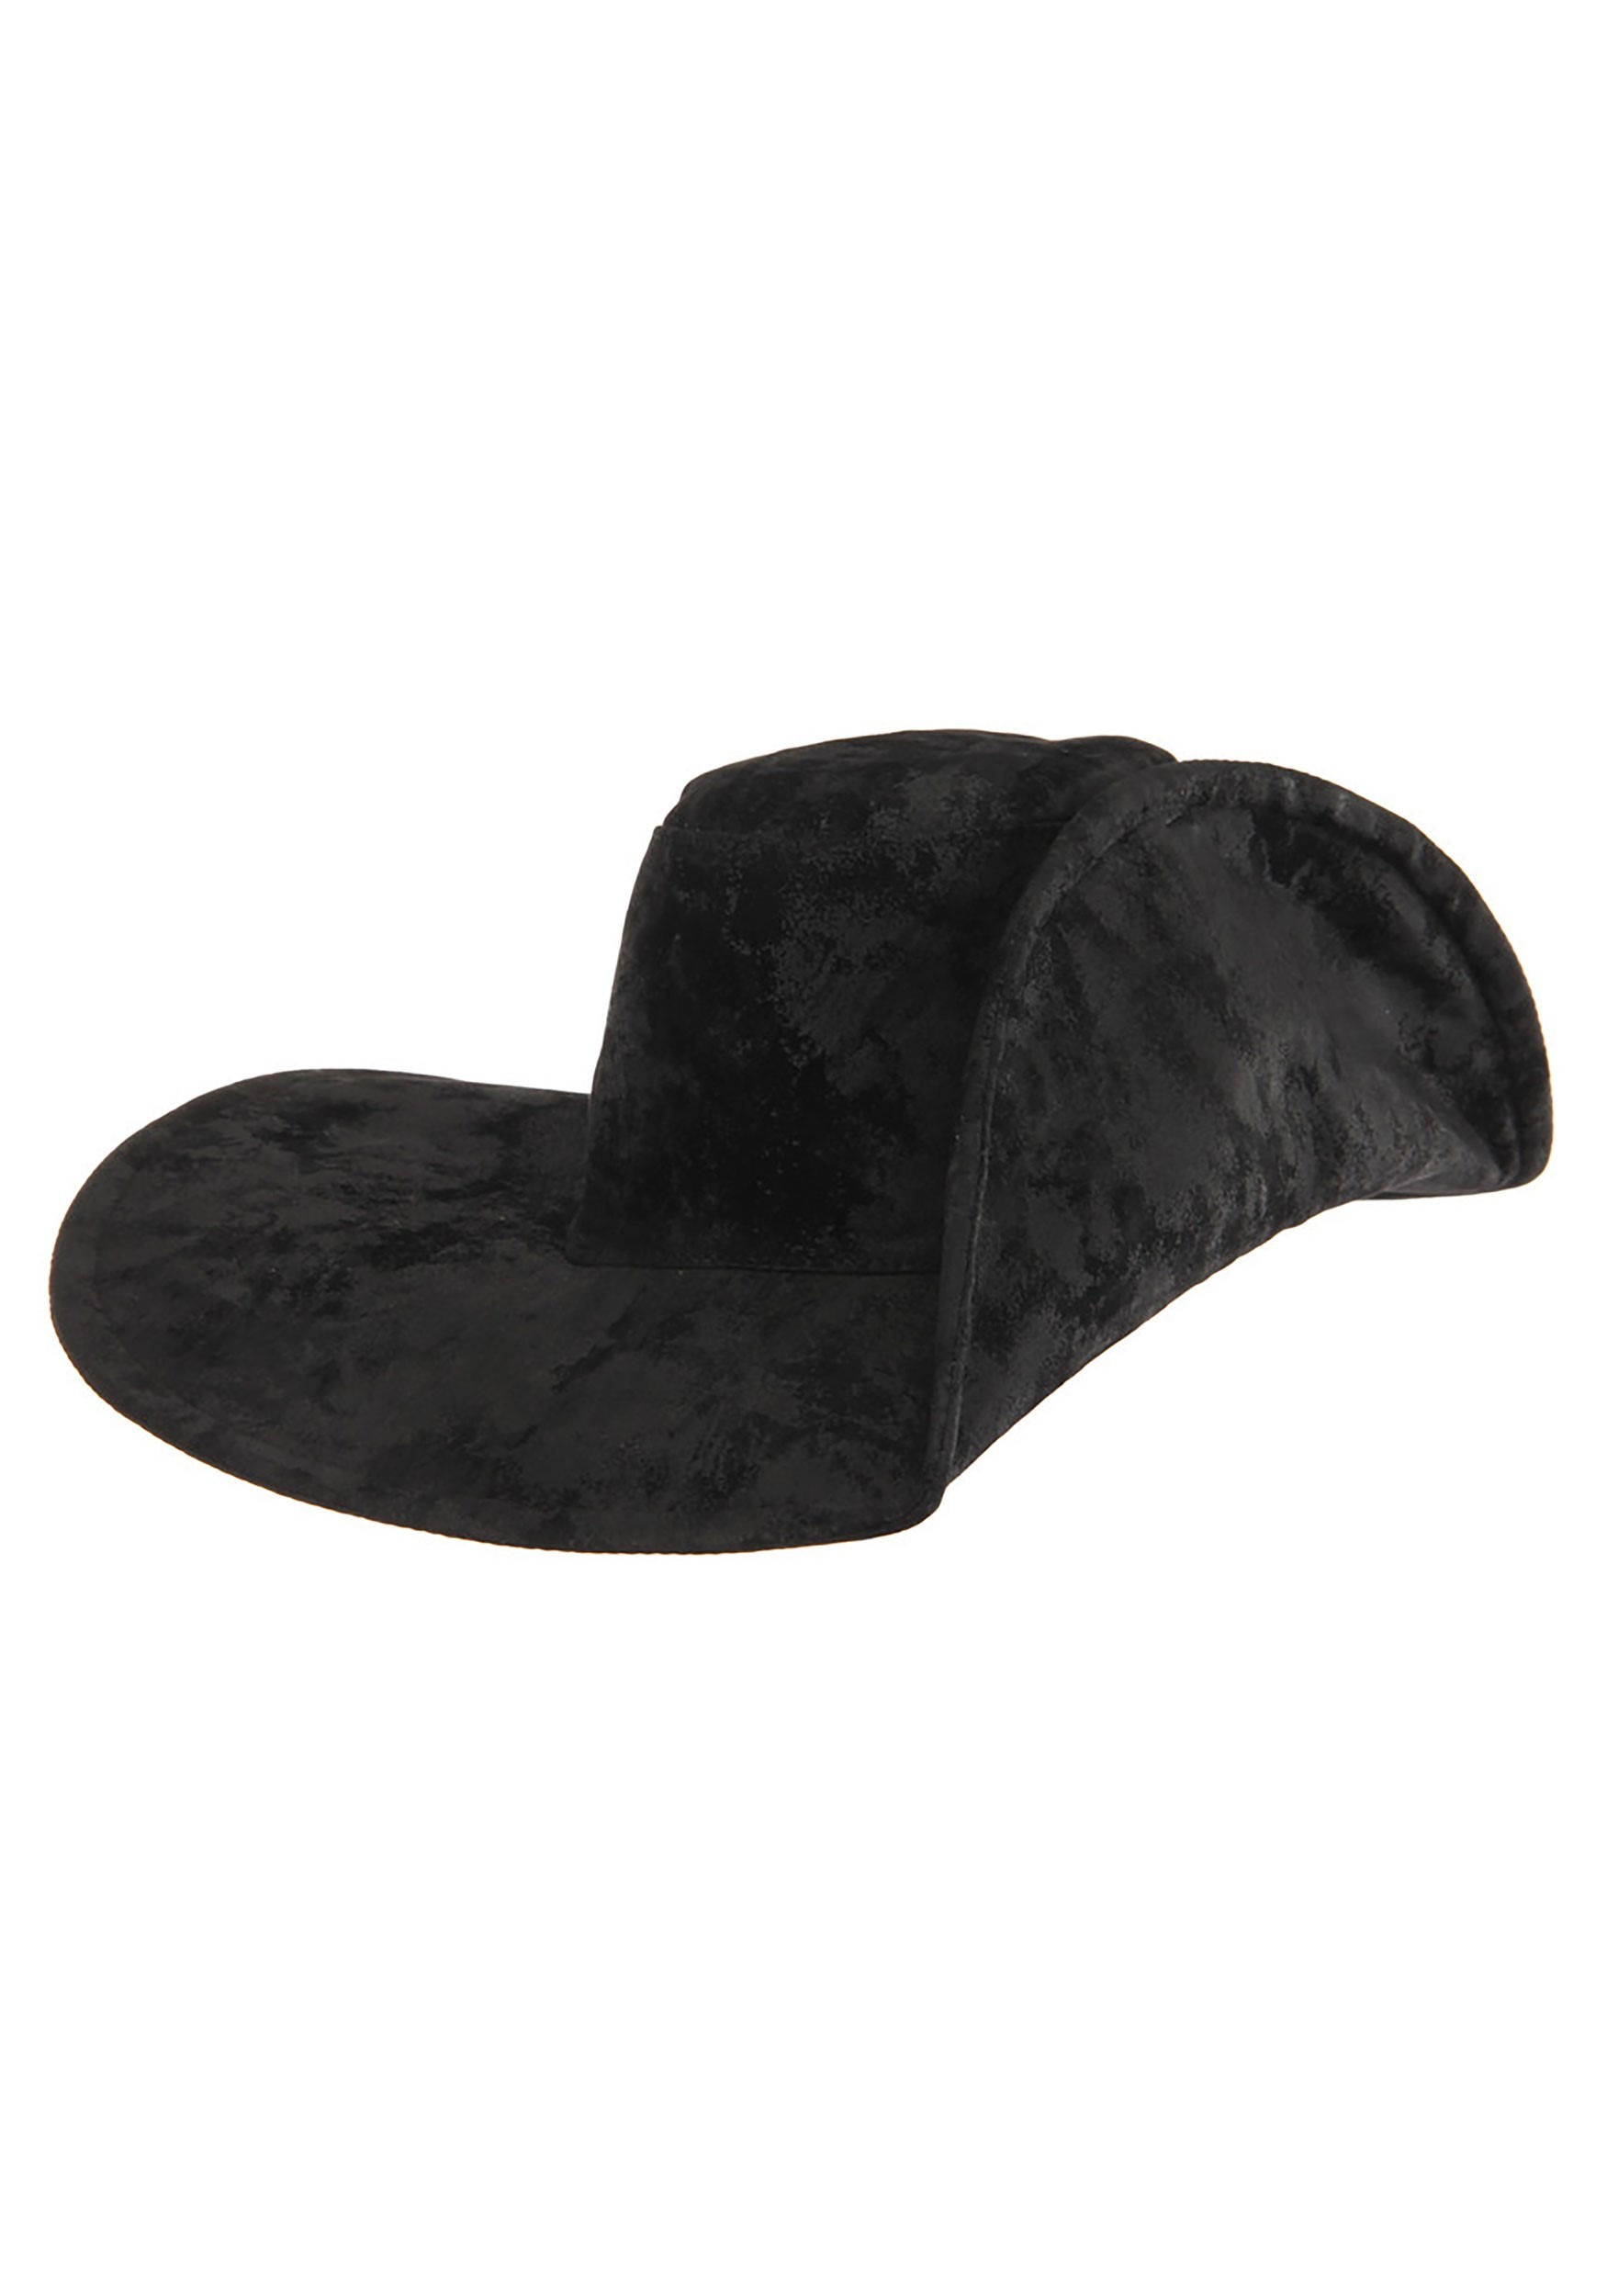 Black Musketeer Fancy Dress Costume Hat